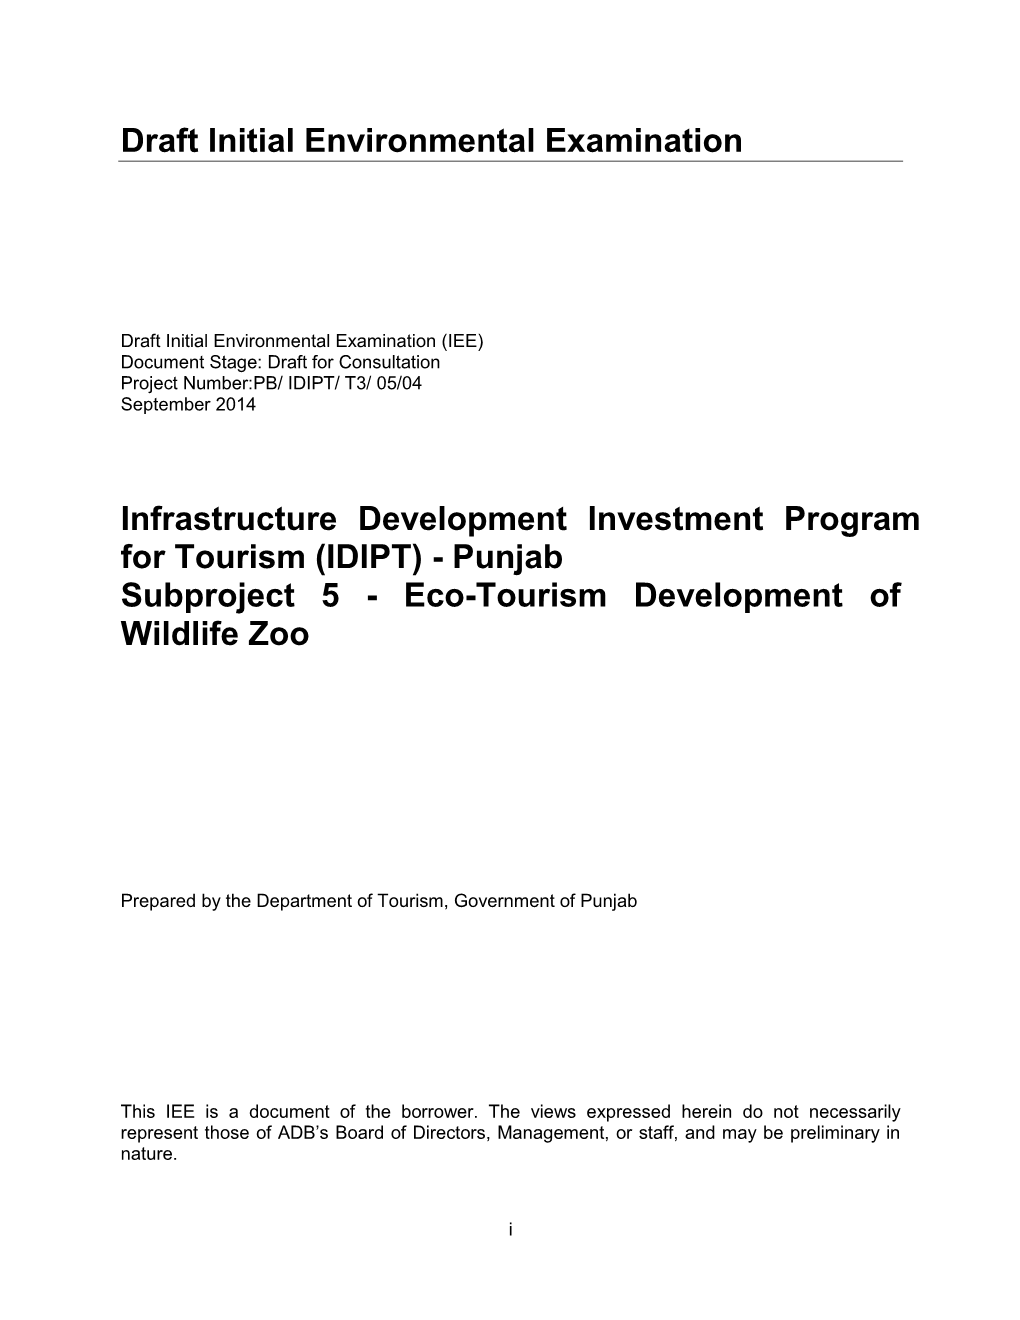 Draft Initial Environmental Examination Infrastructure Development Investment Program for Tourism (IDIPT)